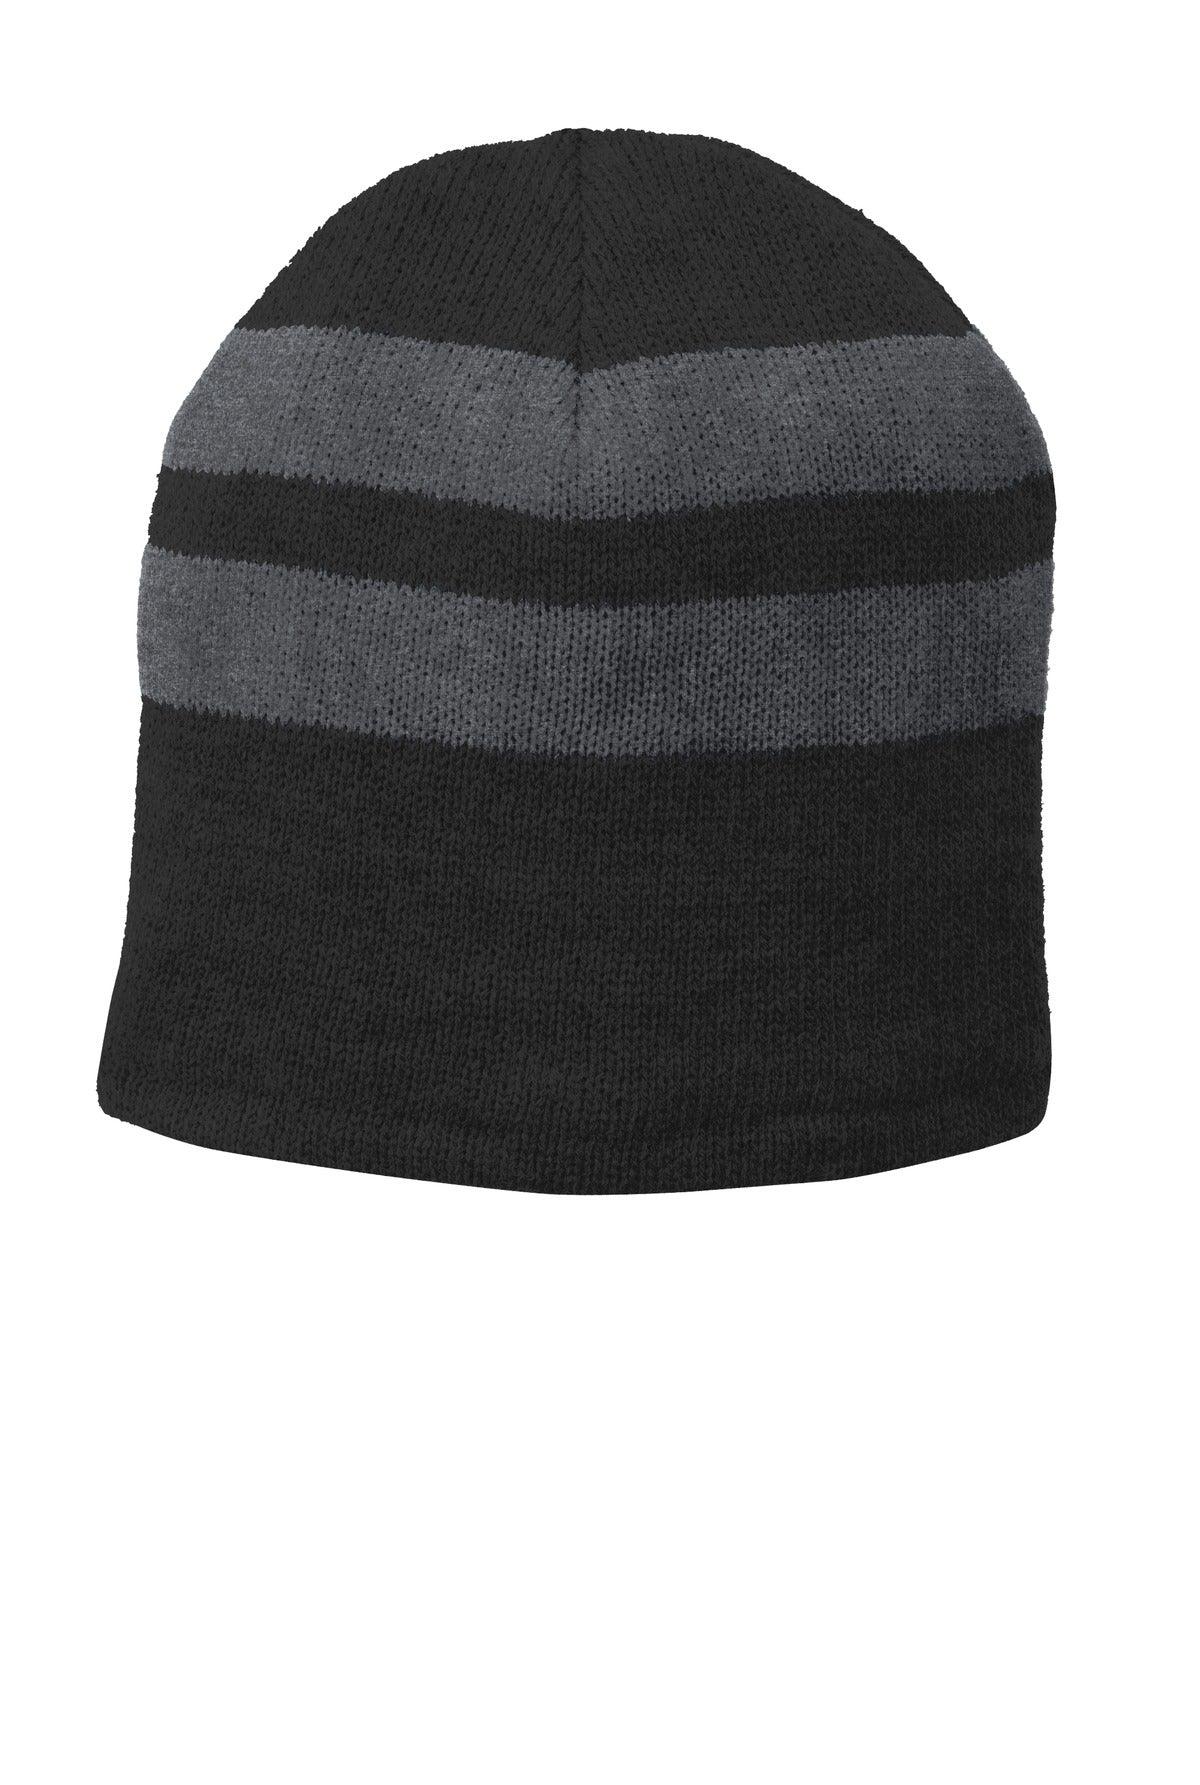 Port & Company Fleece-Lined Striped Beanie Cap. C922 - Dresses Max